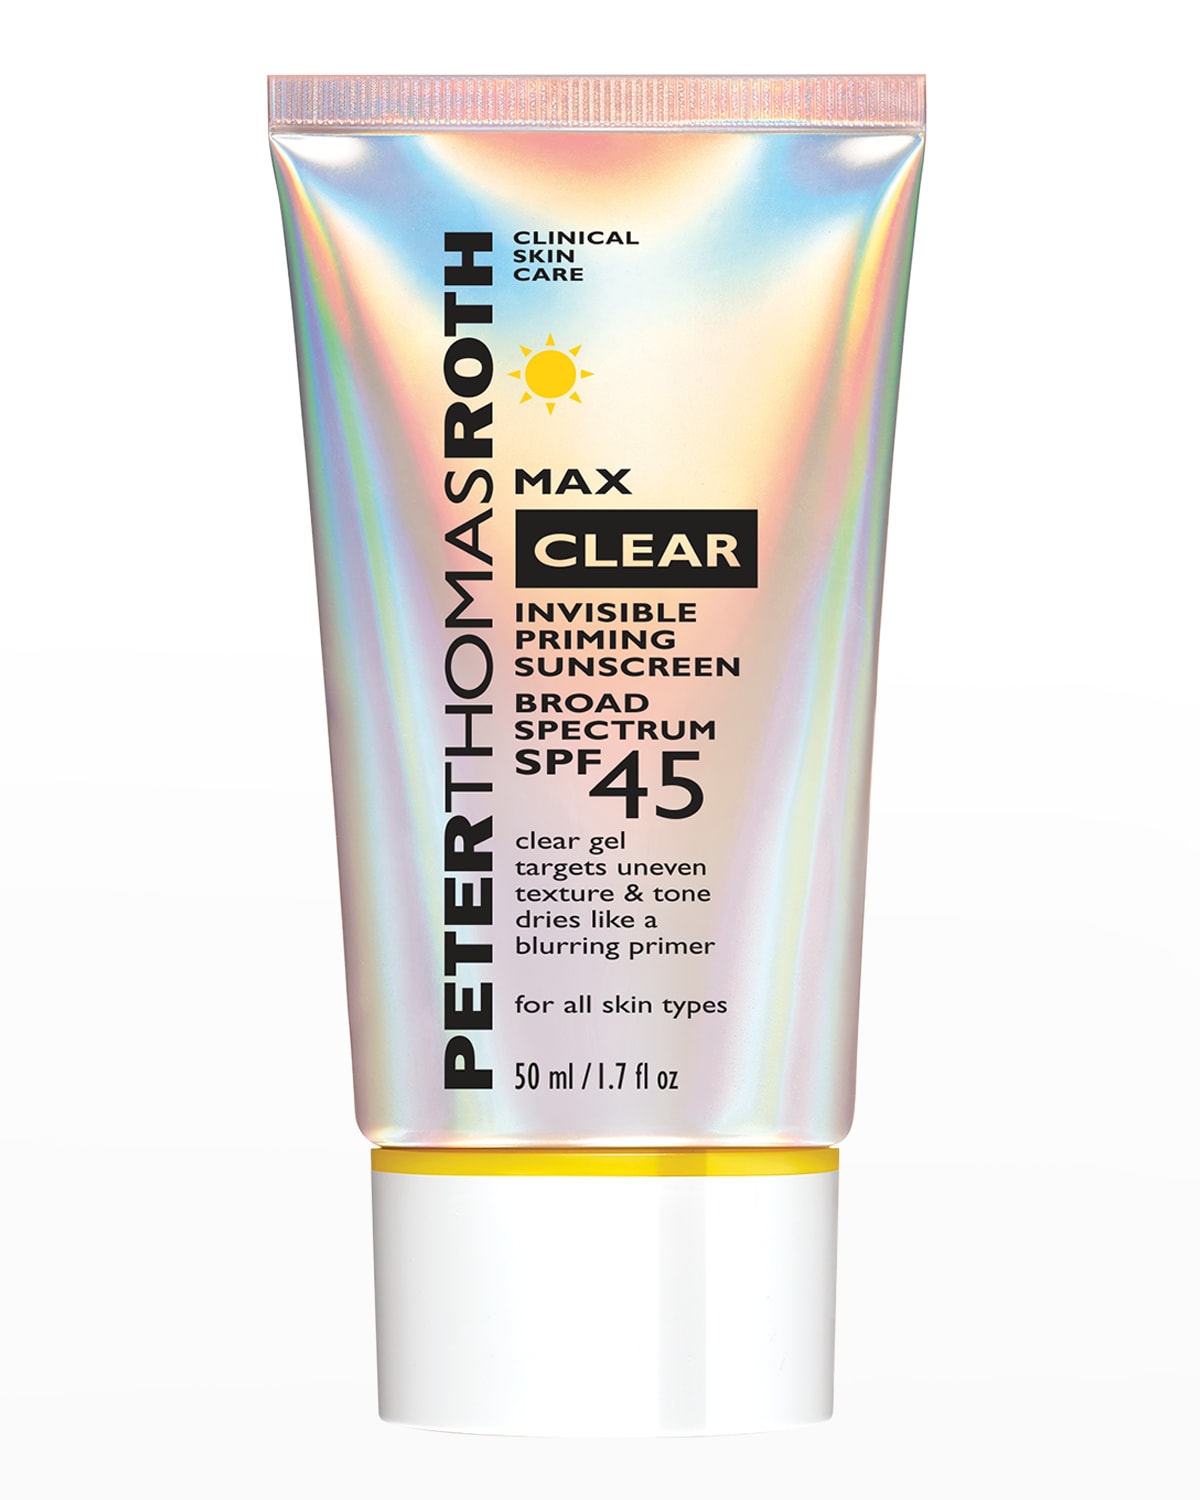 Max Clear Invisible Priming Sunscreen Broad Spectrum SPF 45, 1.7 oz.